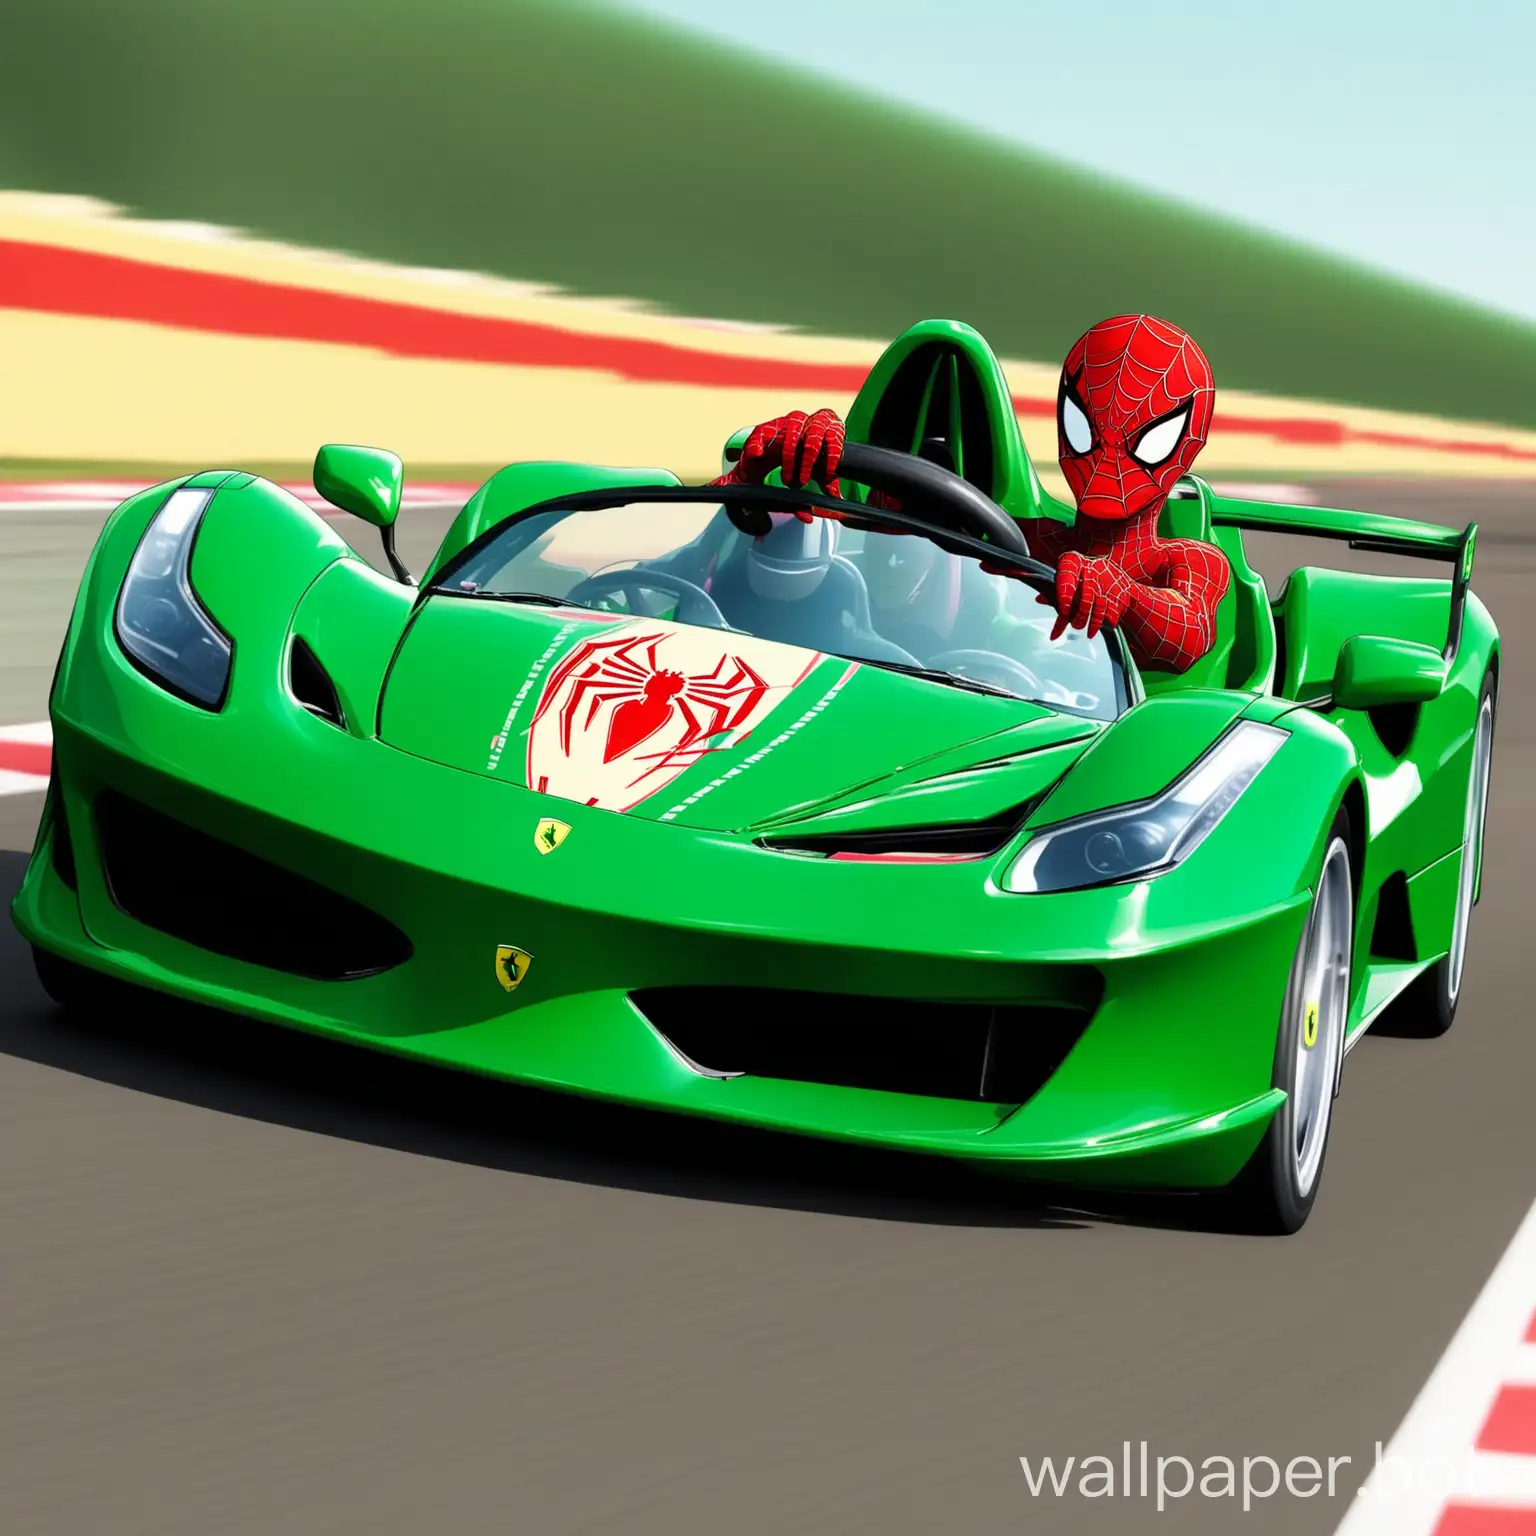 Spiderman-Driving-Green-Ferrari-Racecar